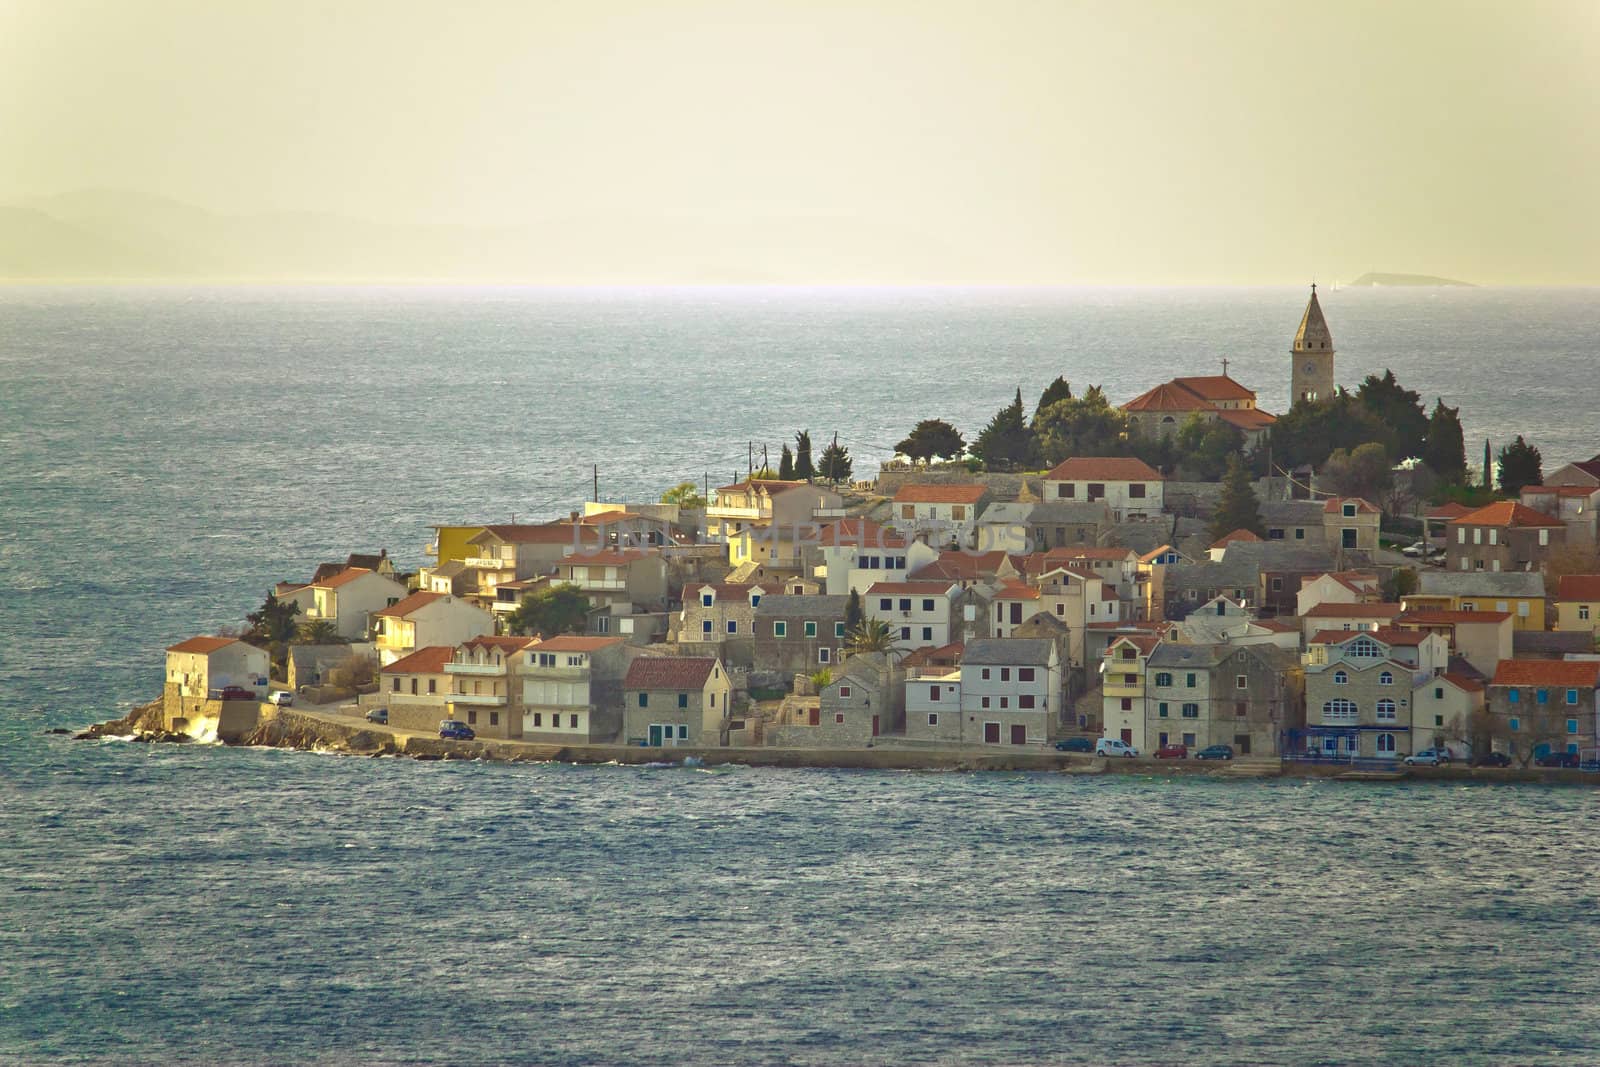 Adriatic Town of Primosten on sea by xbrchx